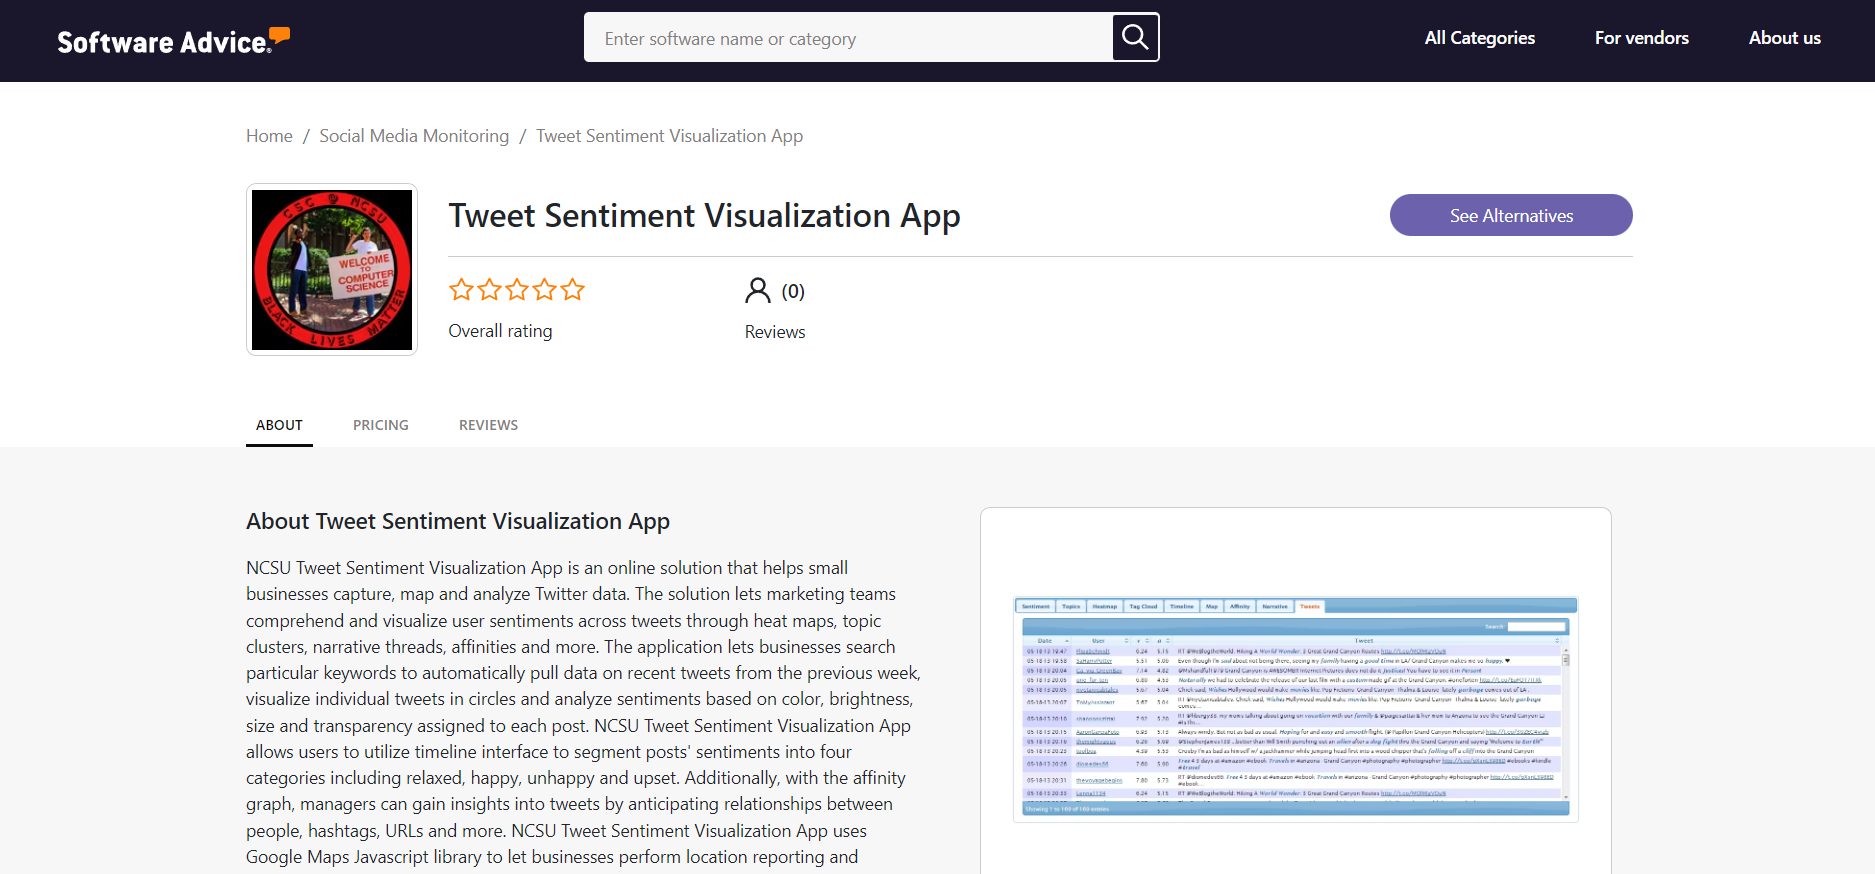 NCSU Tweet Sentiment Visualization App